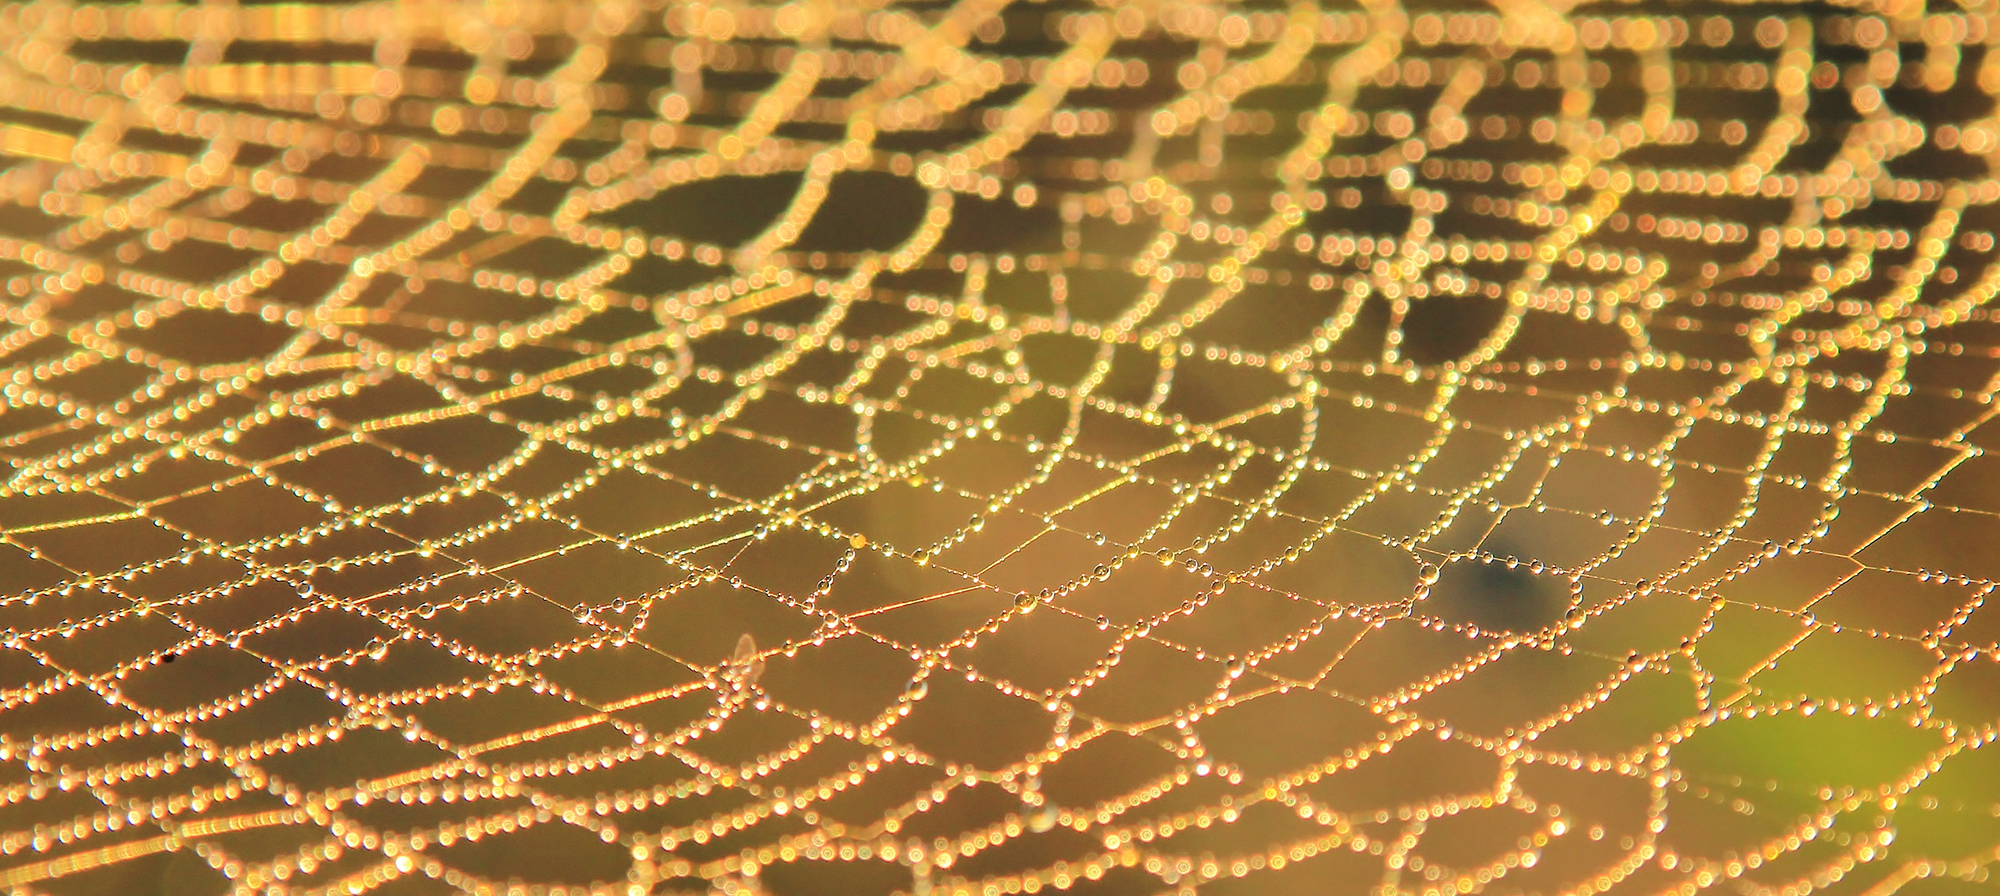 close-up of golden spider web